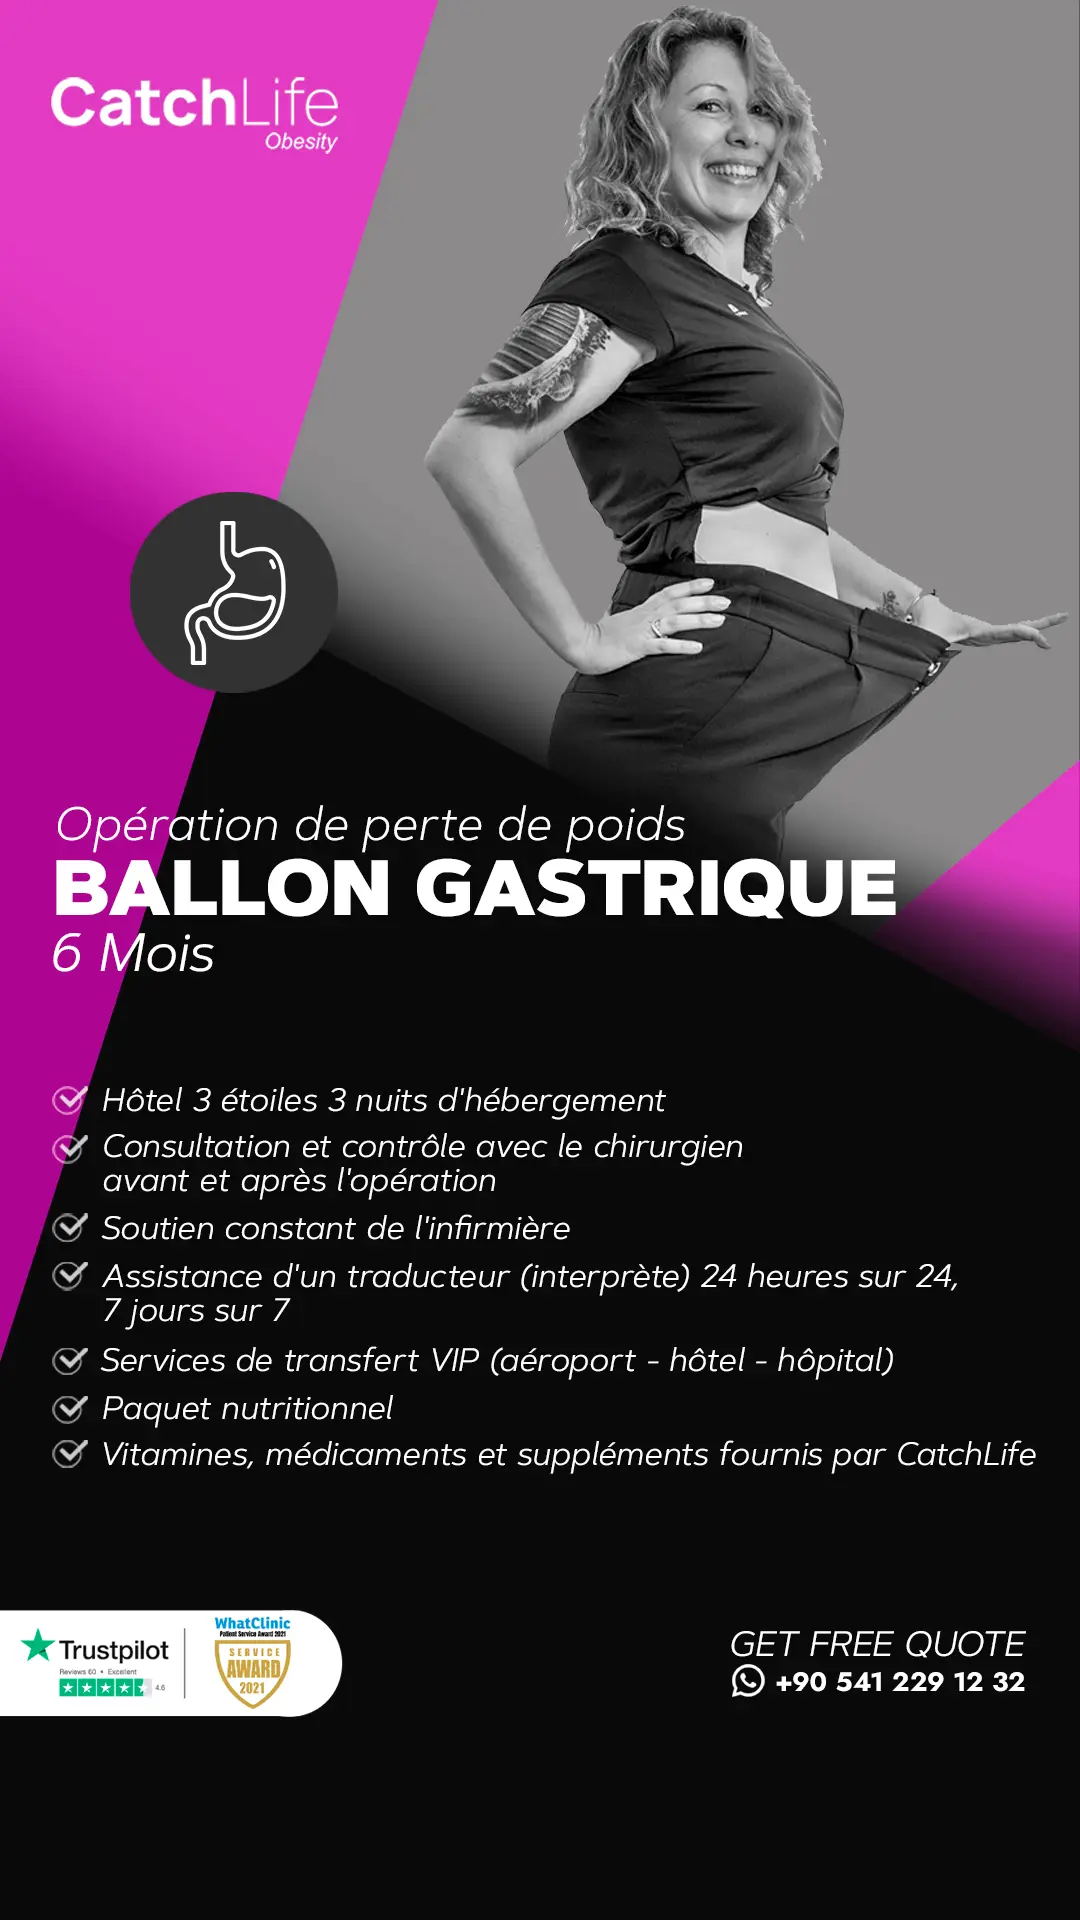 gastric balloon procedure package in turkey